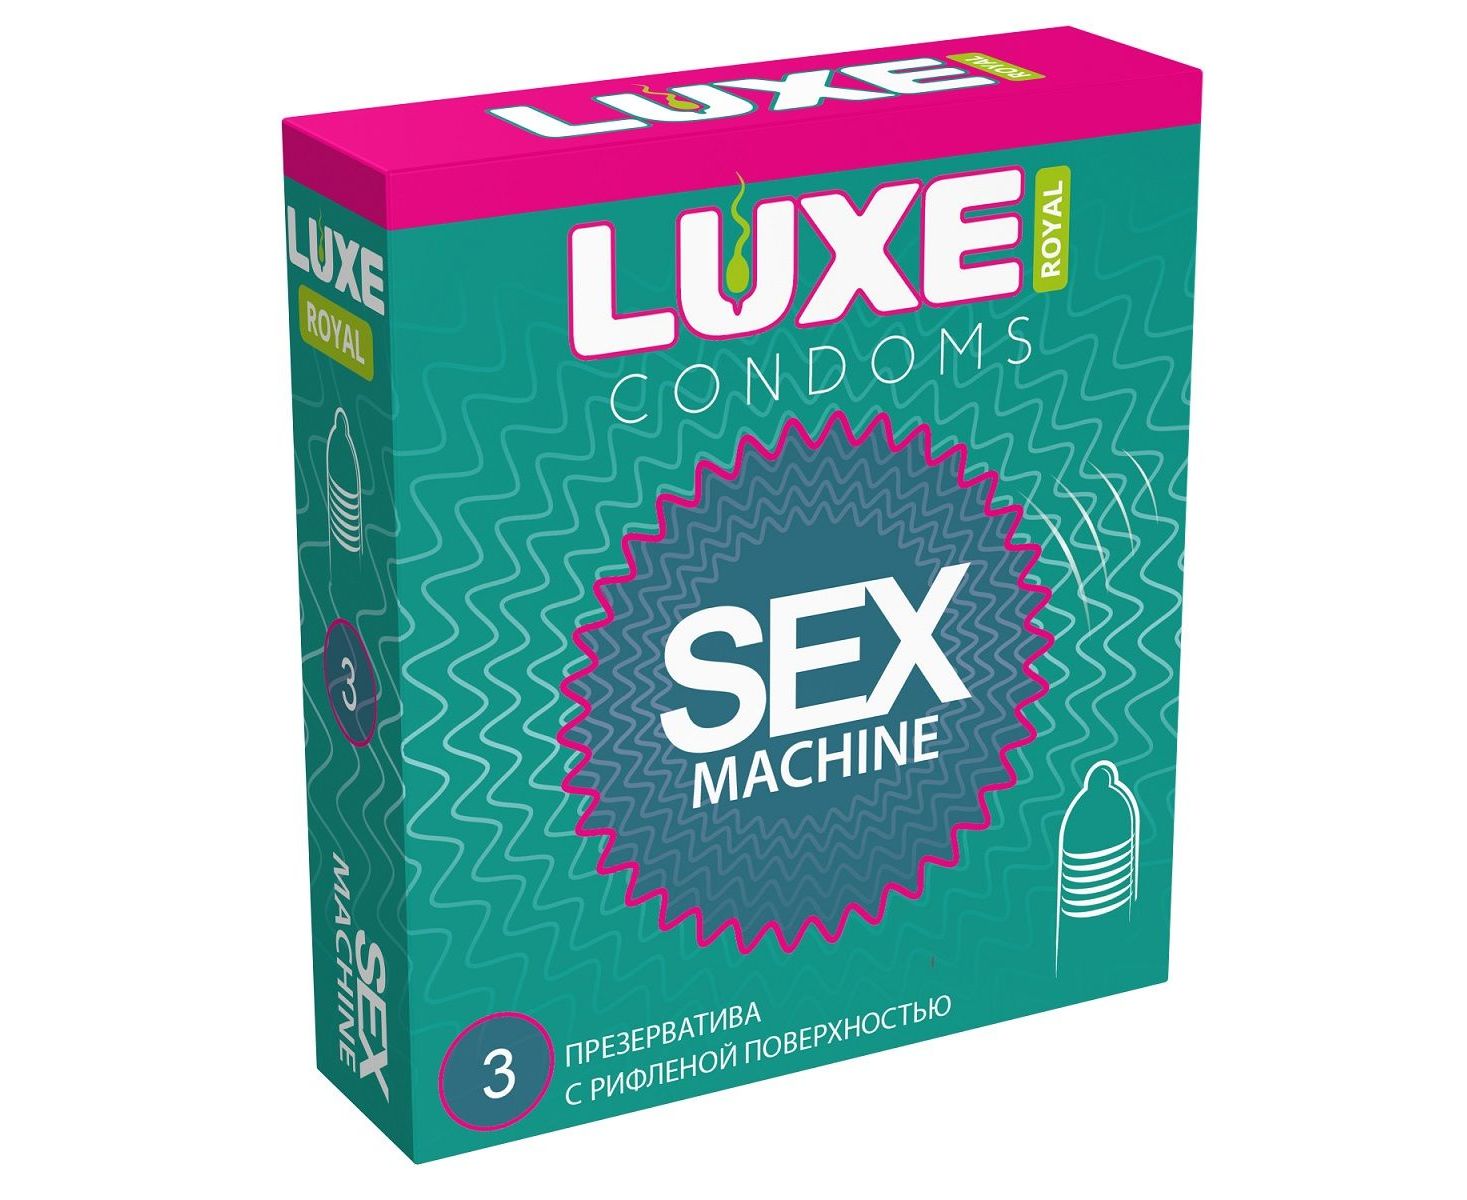 текстурированные презервативы luxe royal sex machine